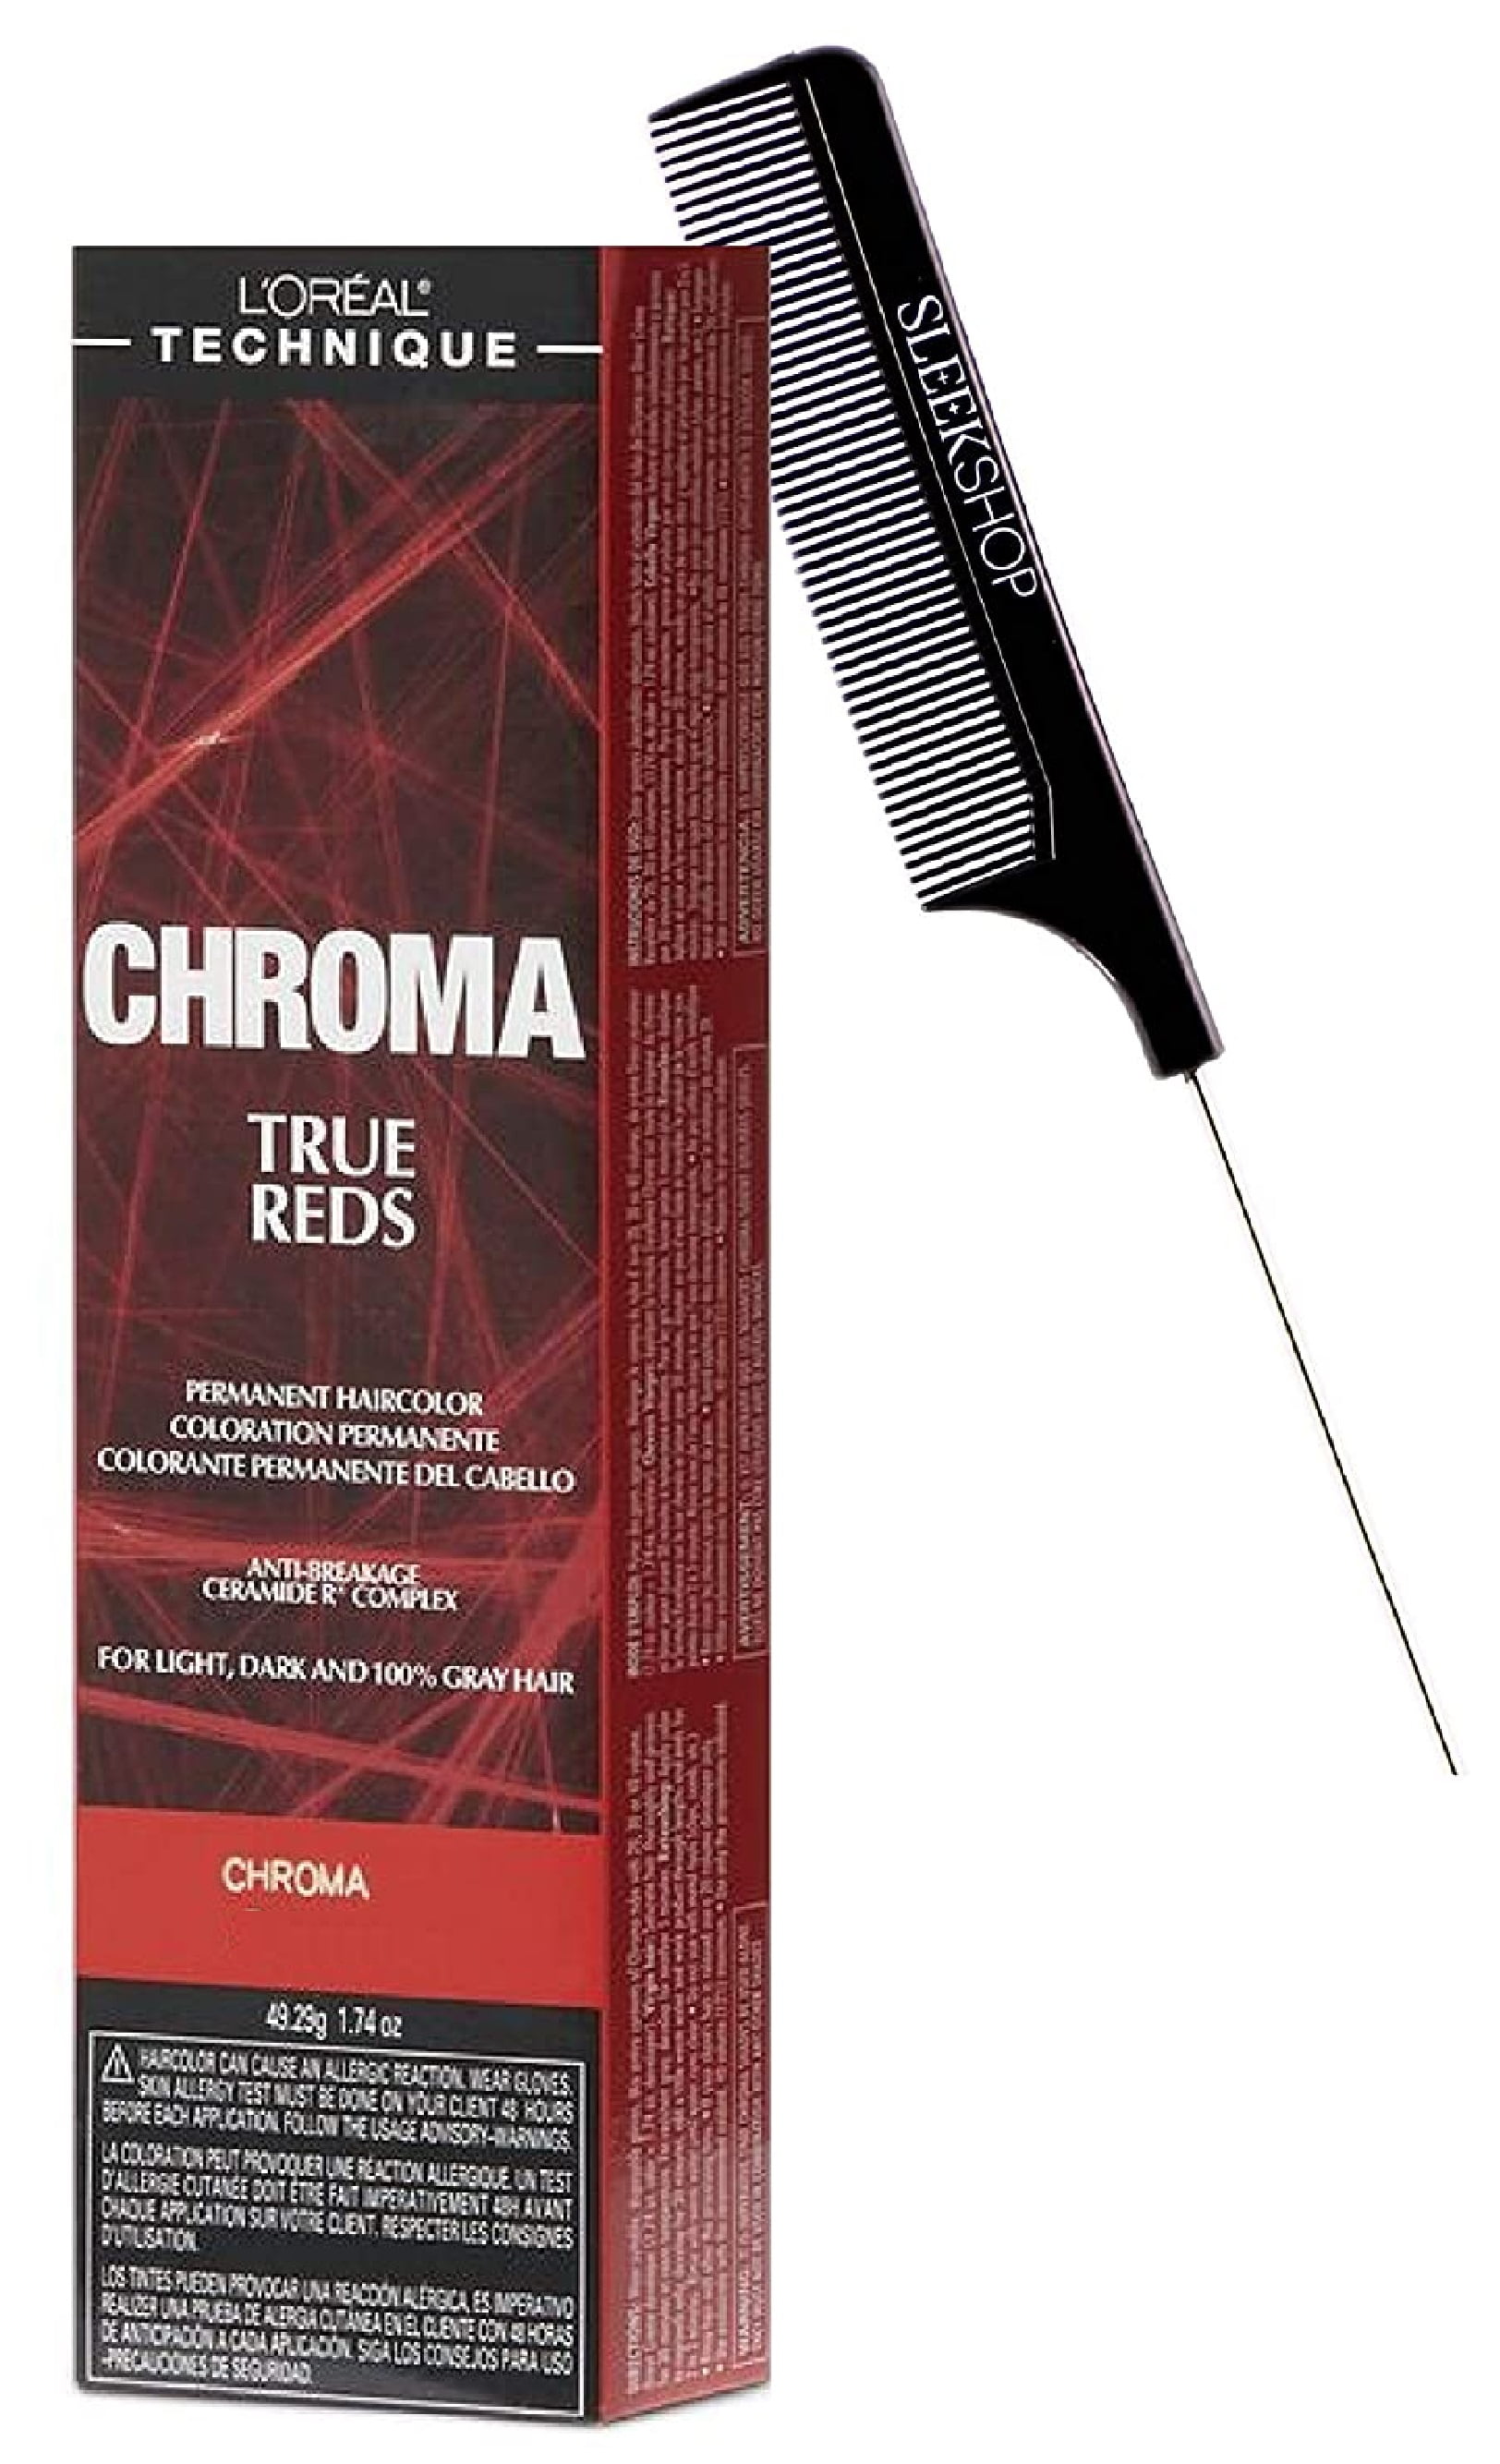 L'oreal Technique CHROMA TRUE REDS Permanent Hair Color for Light, Dark,  100% Gray Hair (w/Sleek Comb) Haircolor Dye Grey (CHERRY) Loreal -  